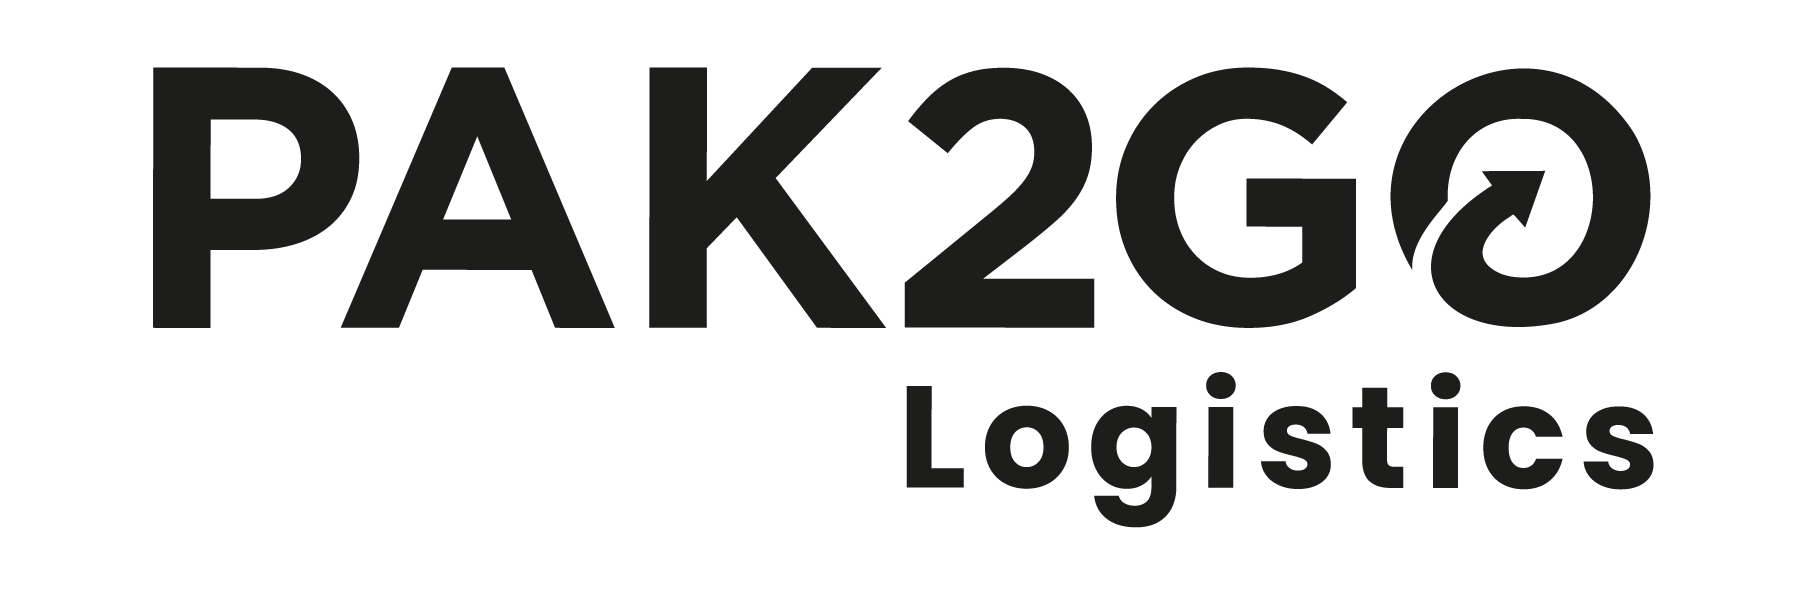 logo-pack-to-go-nuevo1